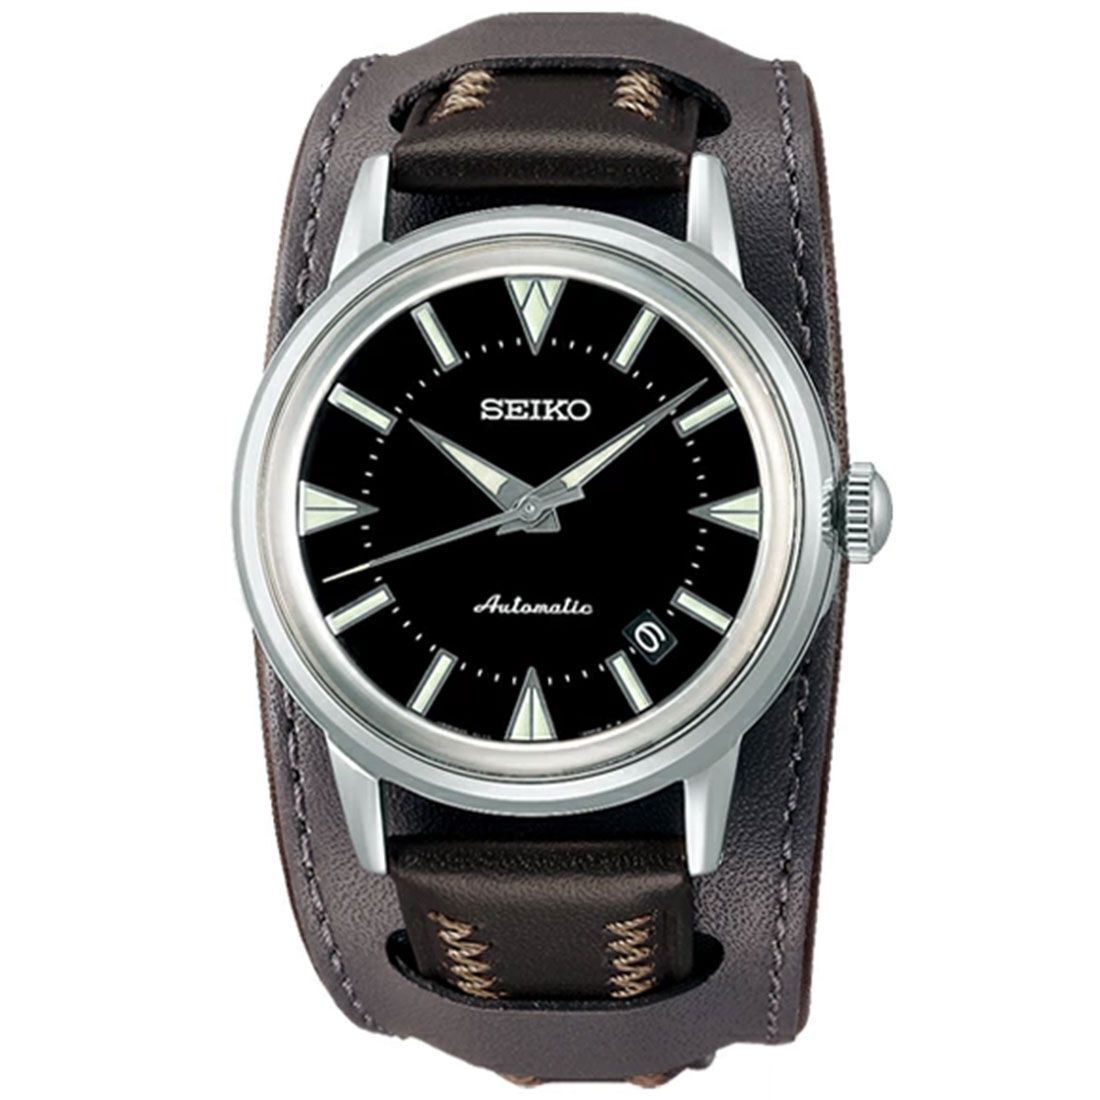 Seiko Prospex First Alpinist Reprint Design JDM Watch SBEN001 -Seiko